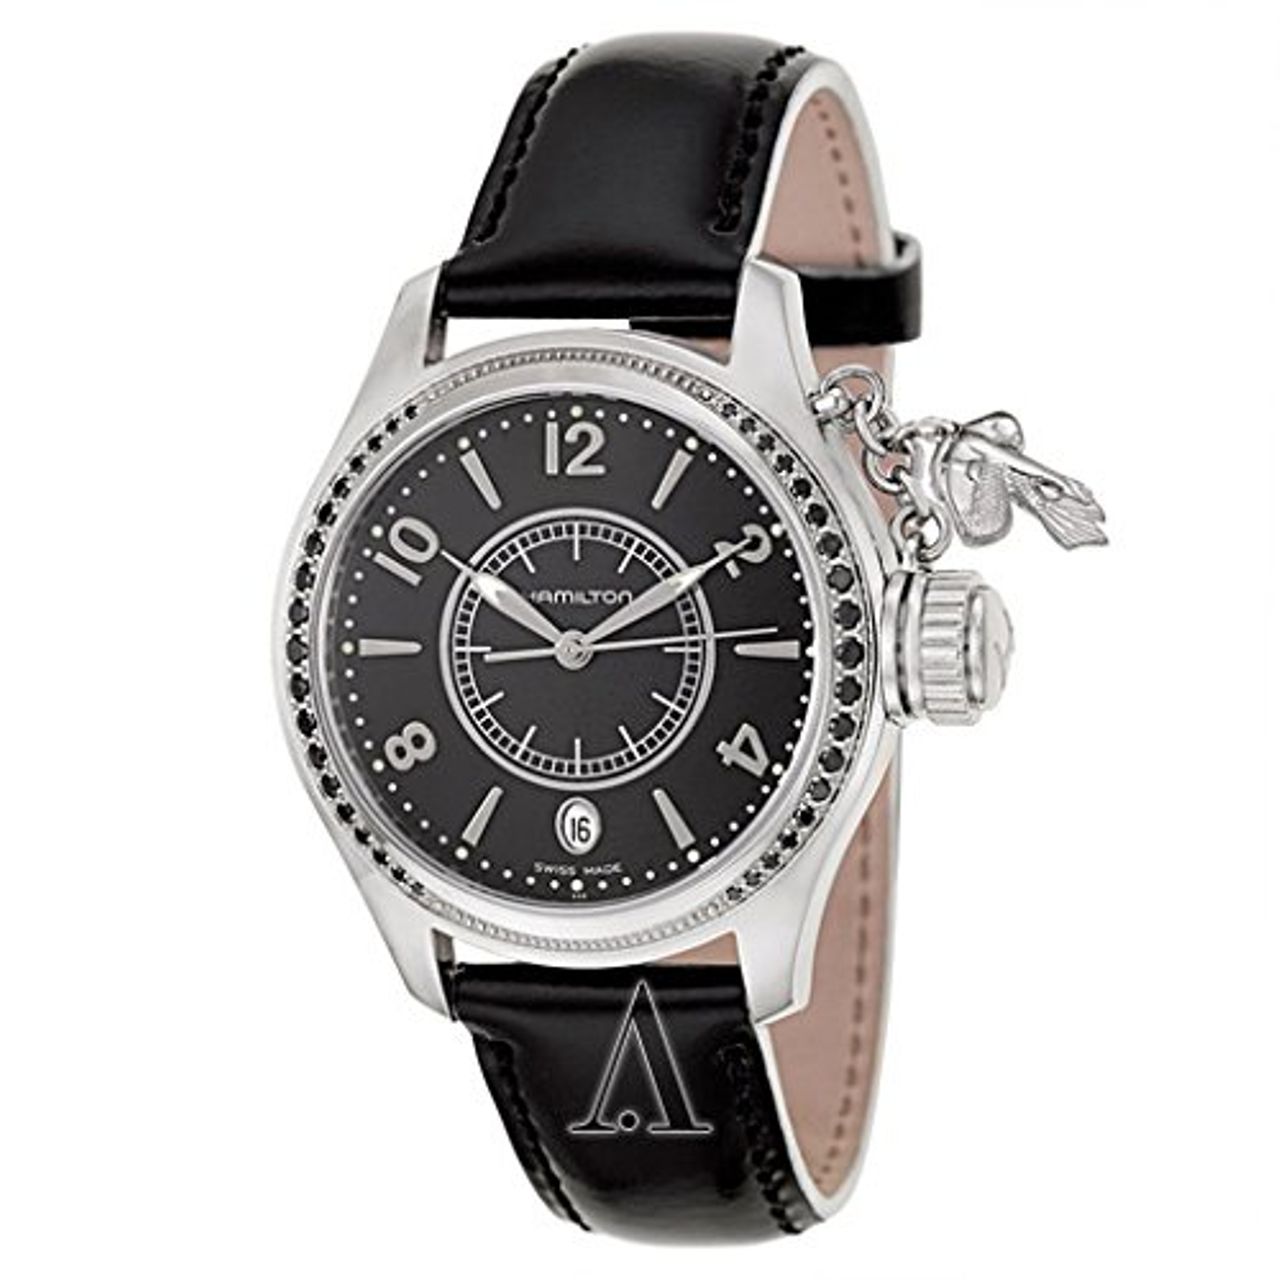 Hamilton H77351935 Womens Black Dial Quartz Watch with Leather Strap